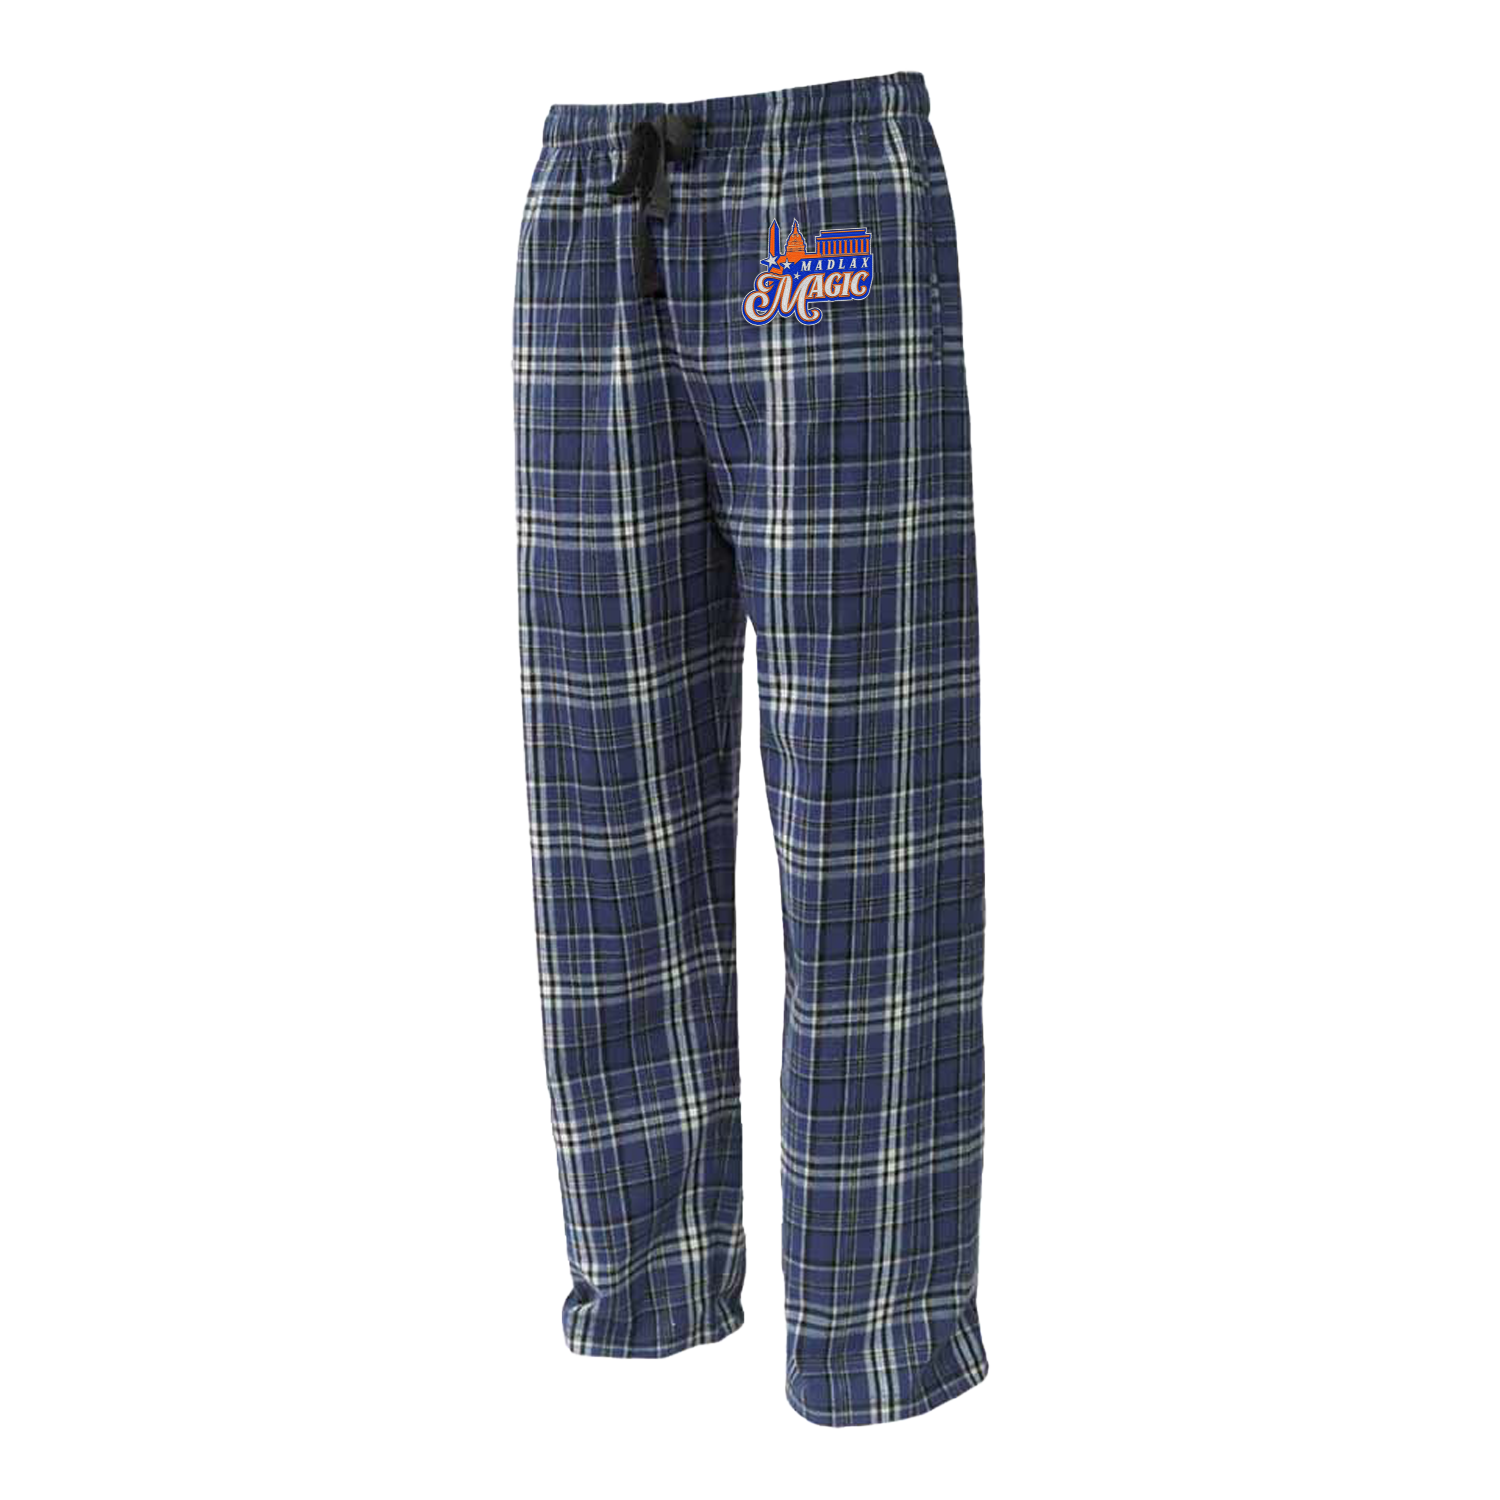 Team Flannel Pajama Pants (Women's)